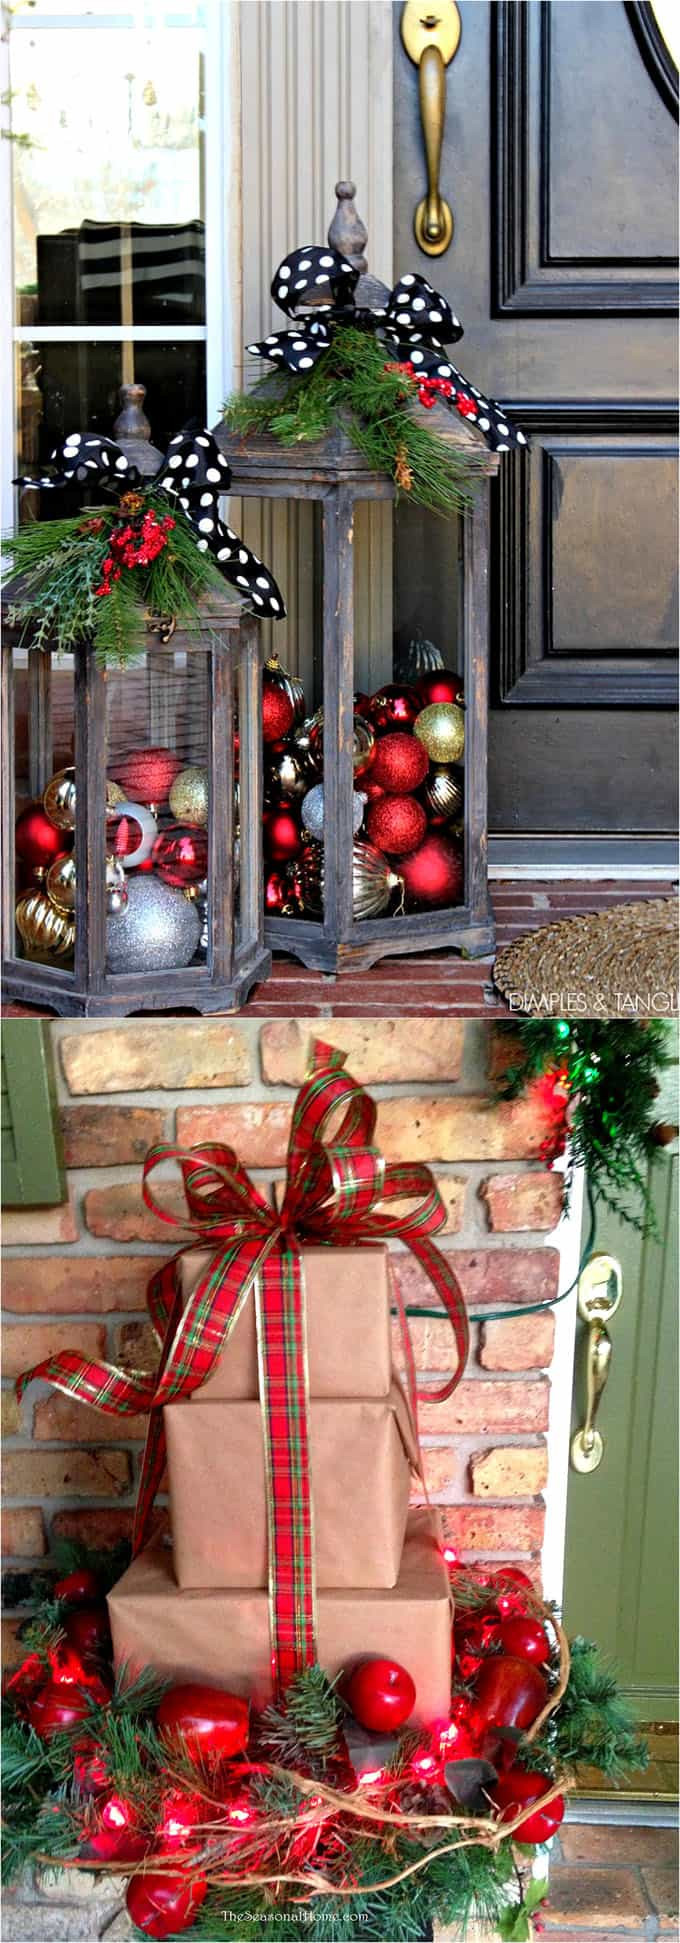 DIY Outdoor Christmas Decor
 Gorgeous Outdoor Christmas Decorations 32 Best Ideas